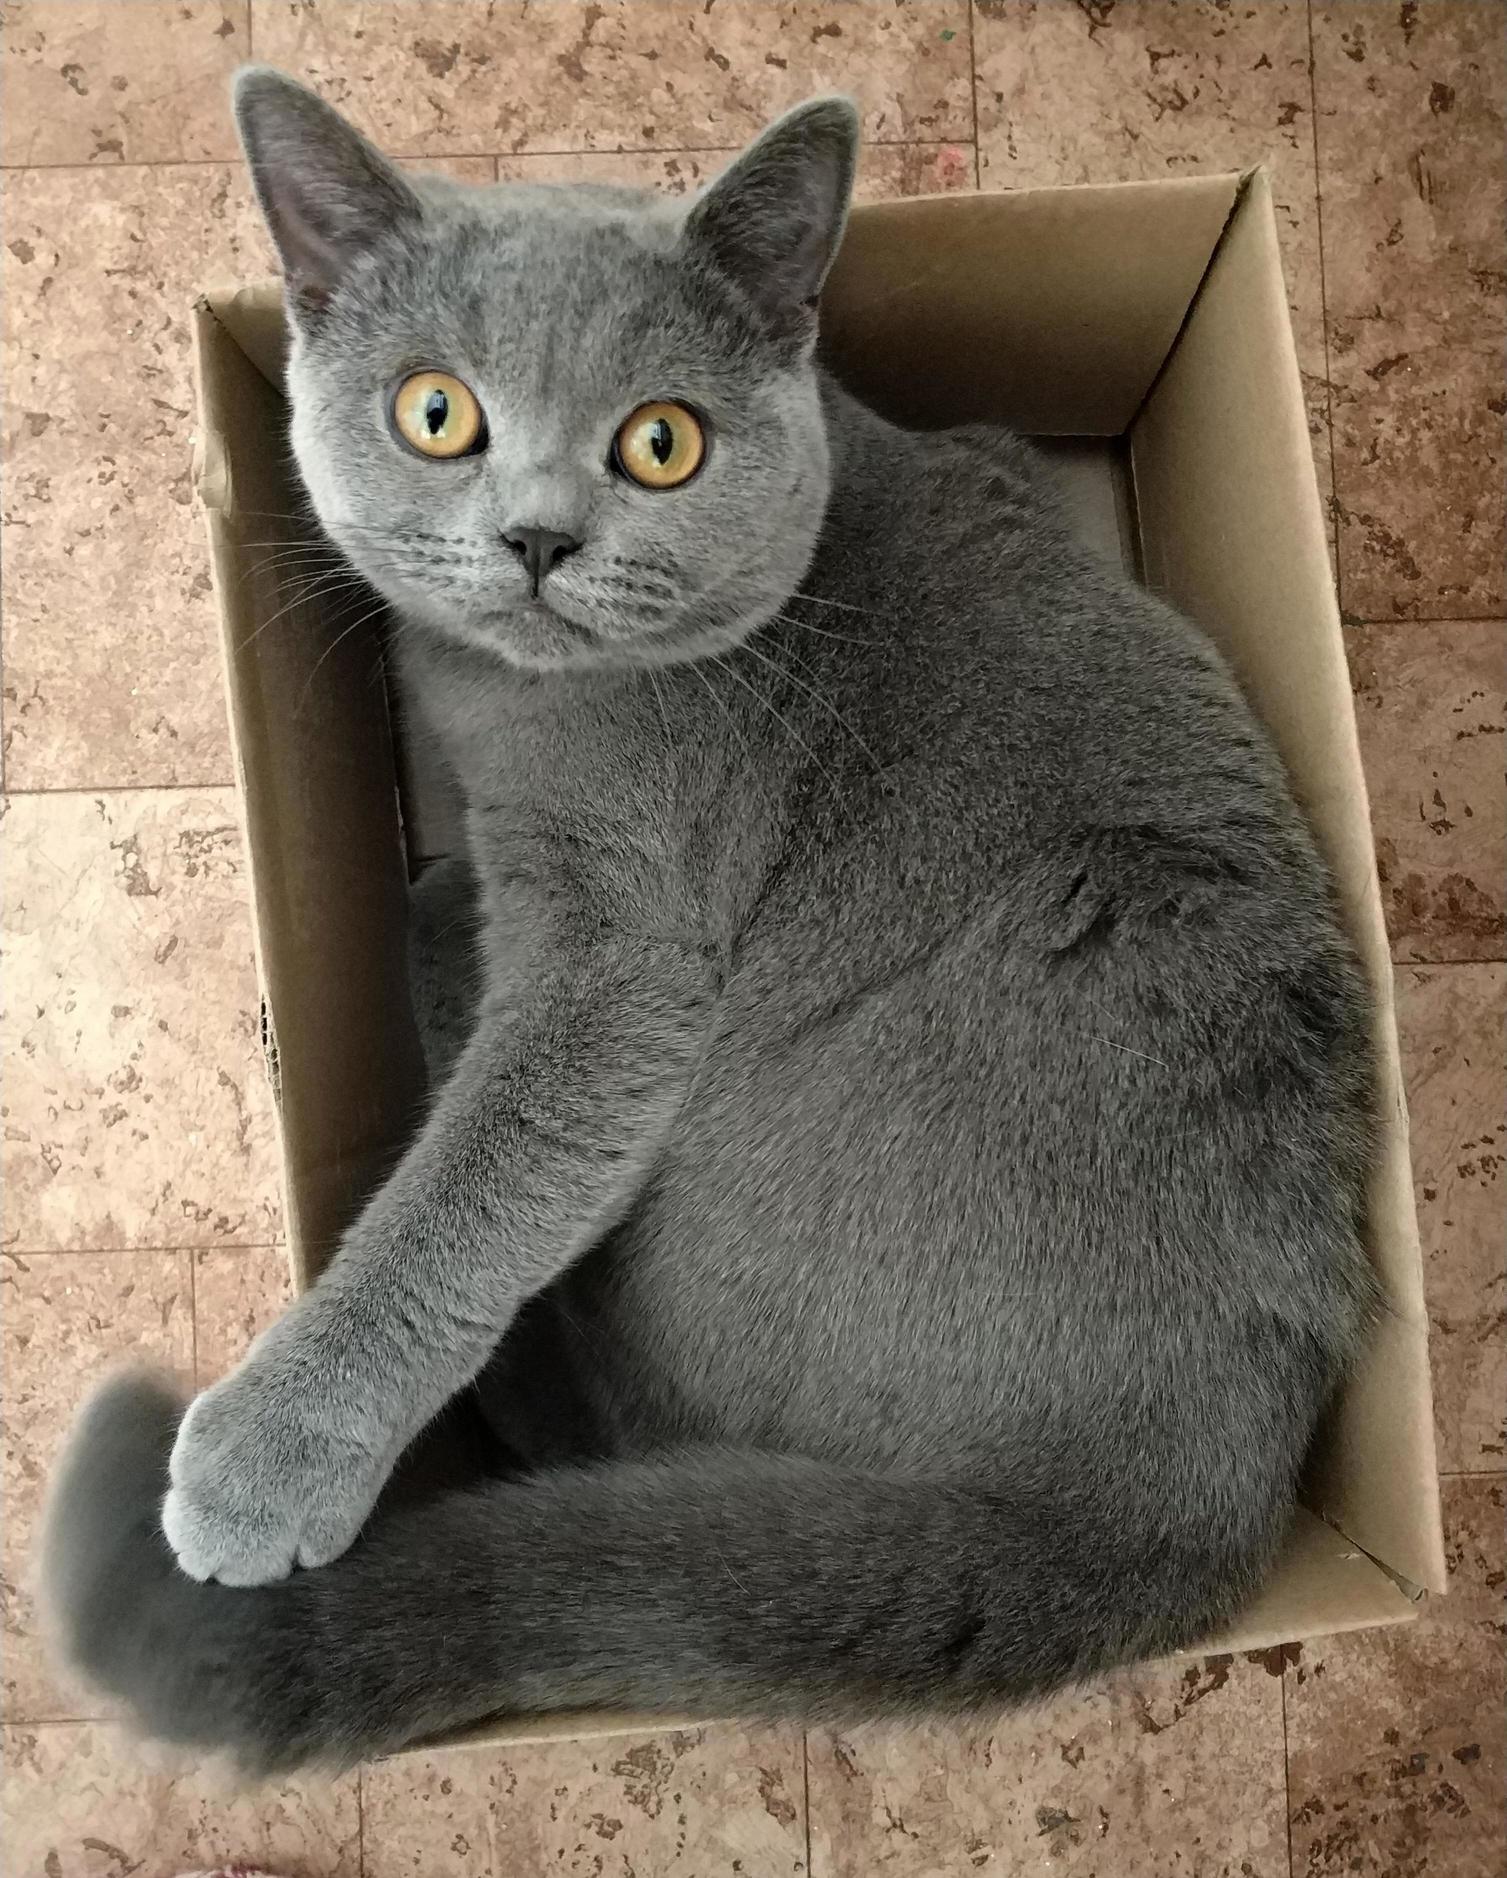 Bishkis sure loves boxes!